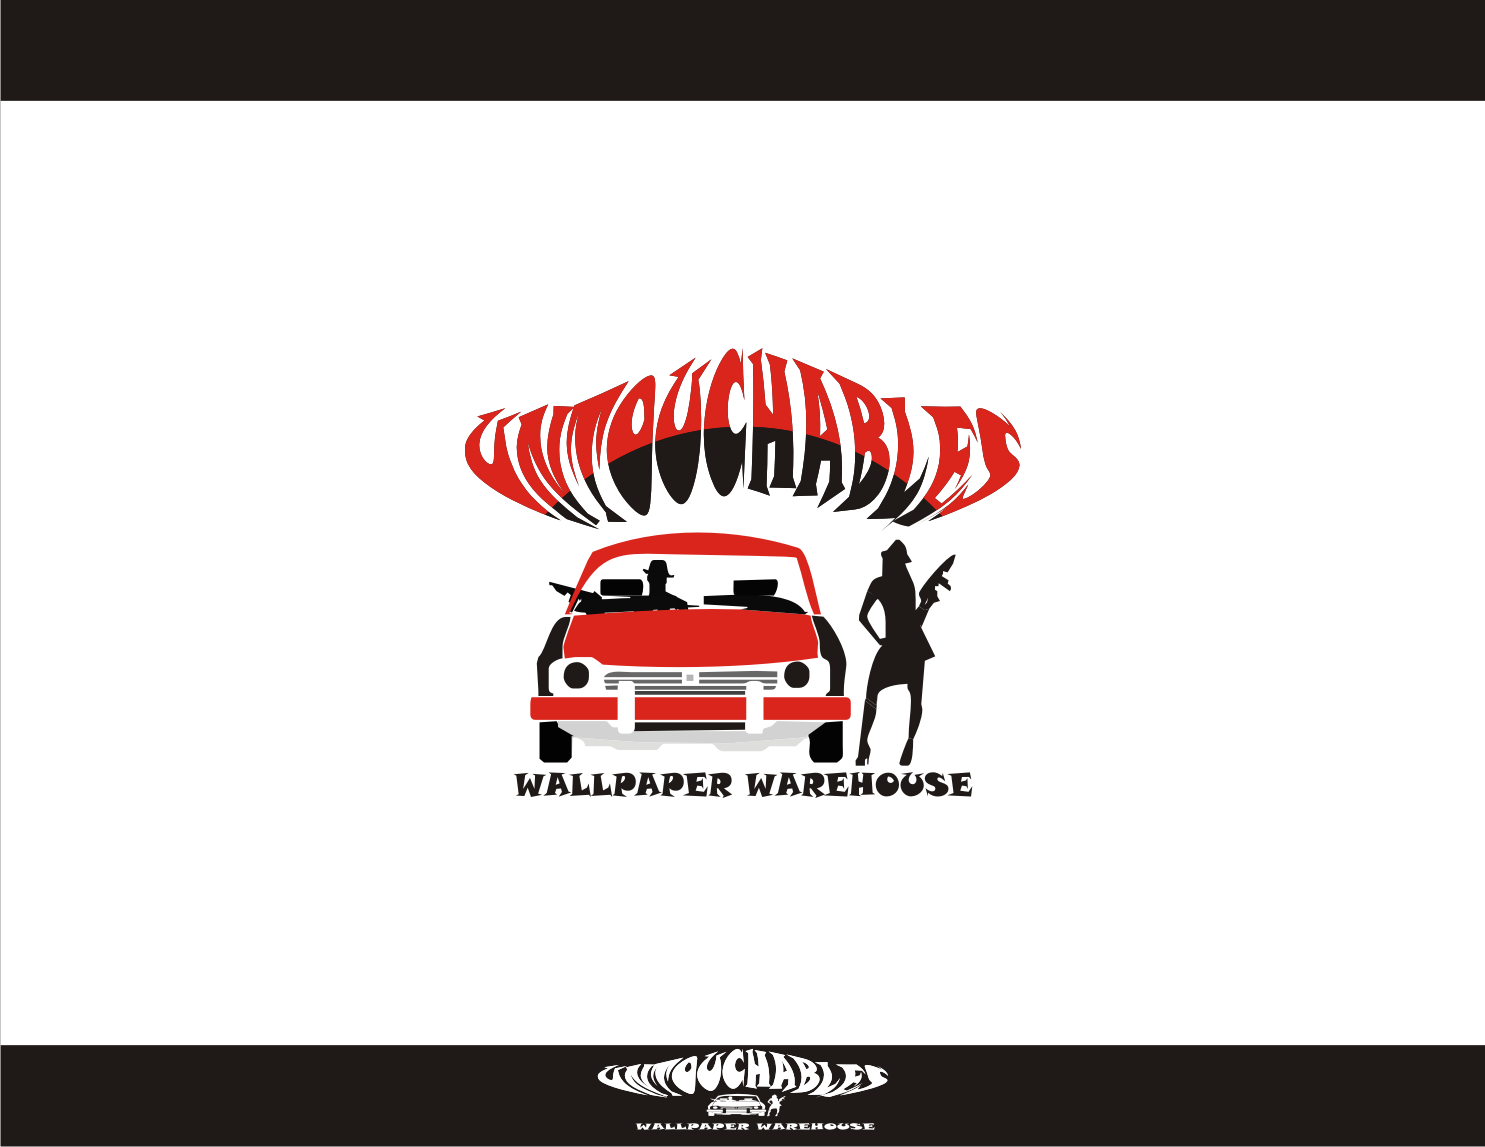 Logo Design By Lelegede For Wallpaper Warehouse - City Car - HD Wallpaper 